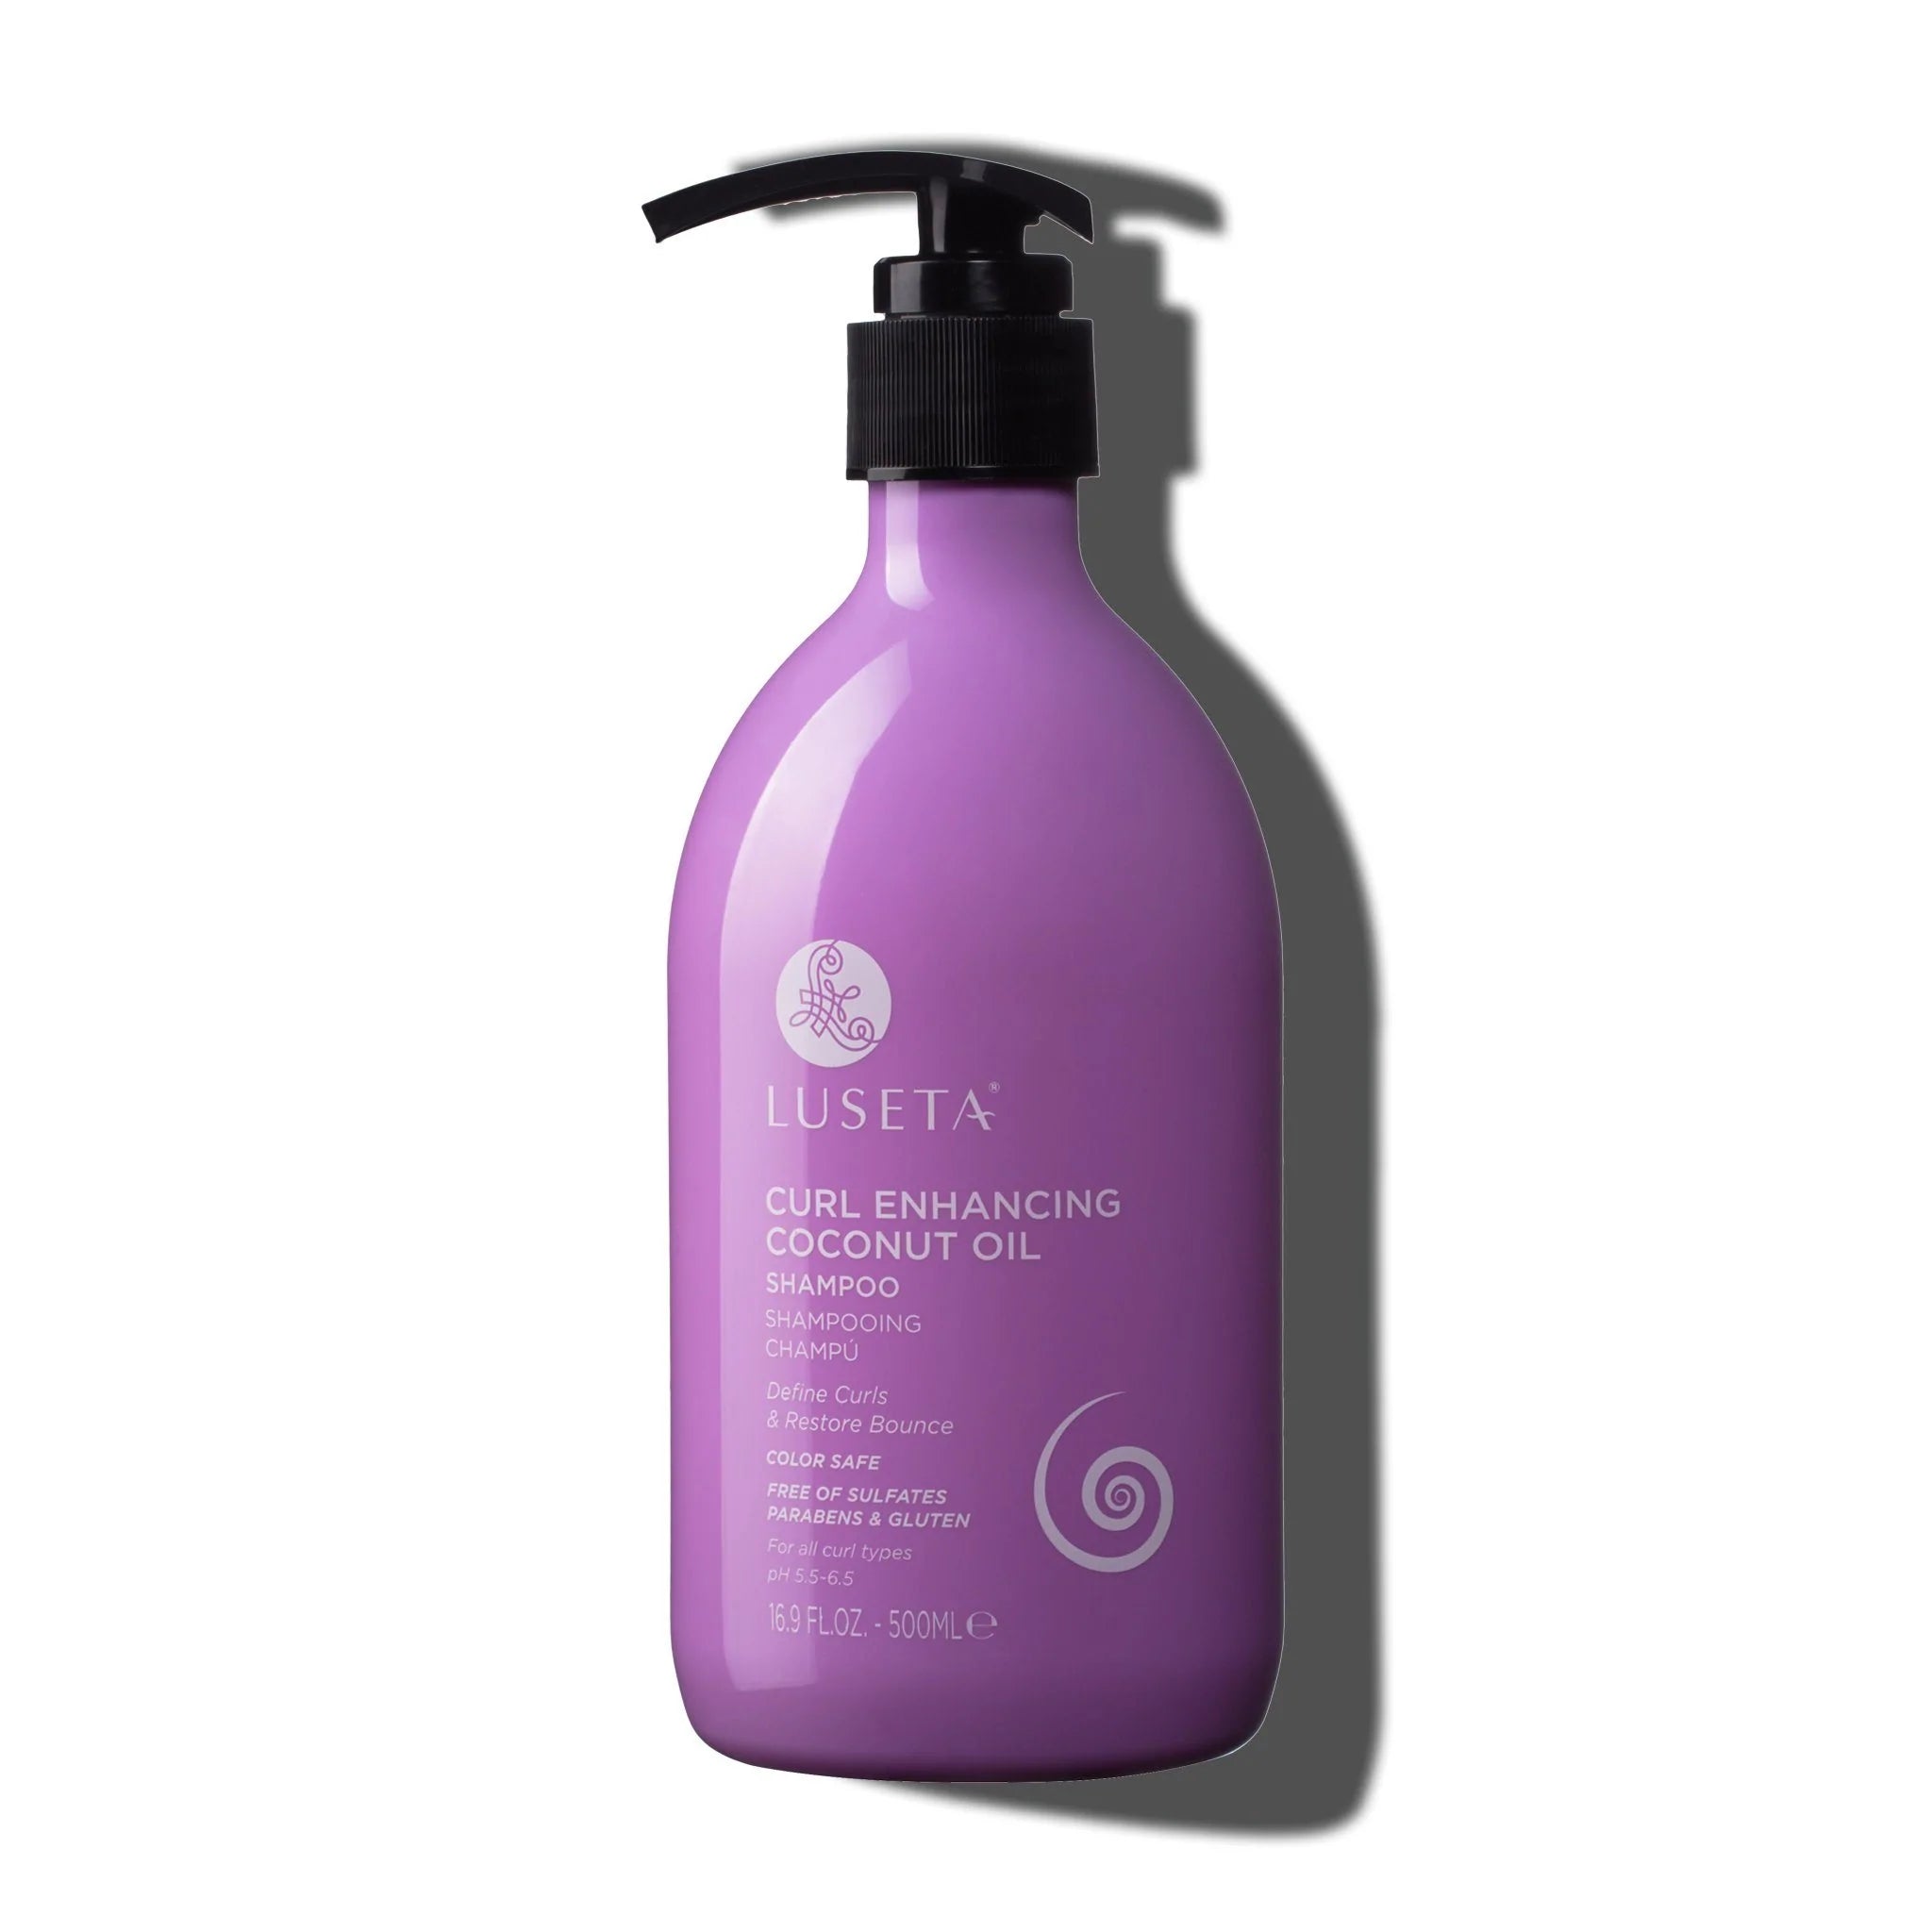 Luseta Curl Enhancing Coconut Oil Shampoo 500 mL - Define Curls & Restore Bounce - For All Curl Types